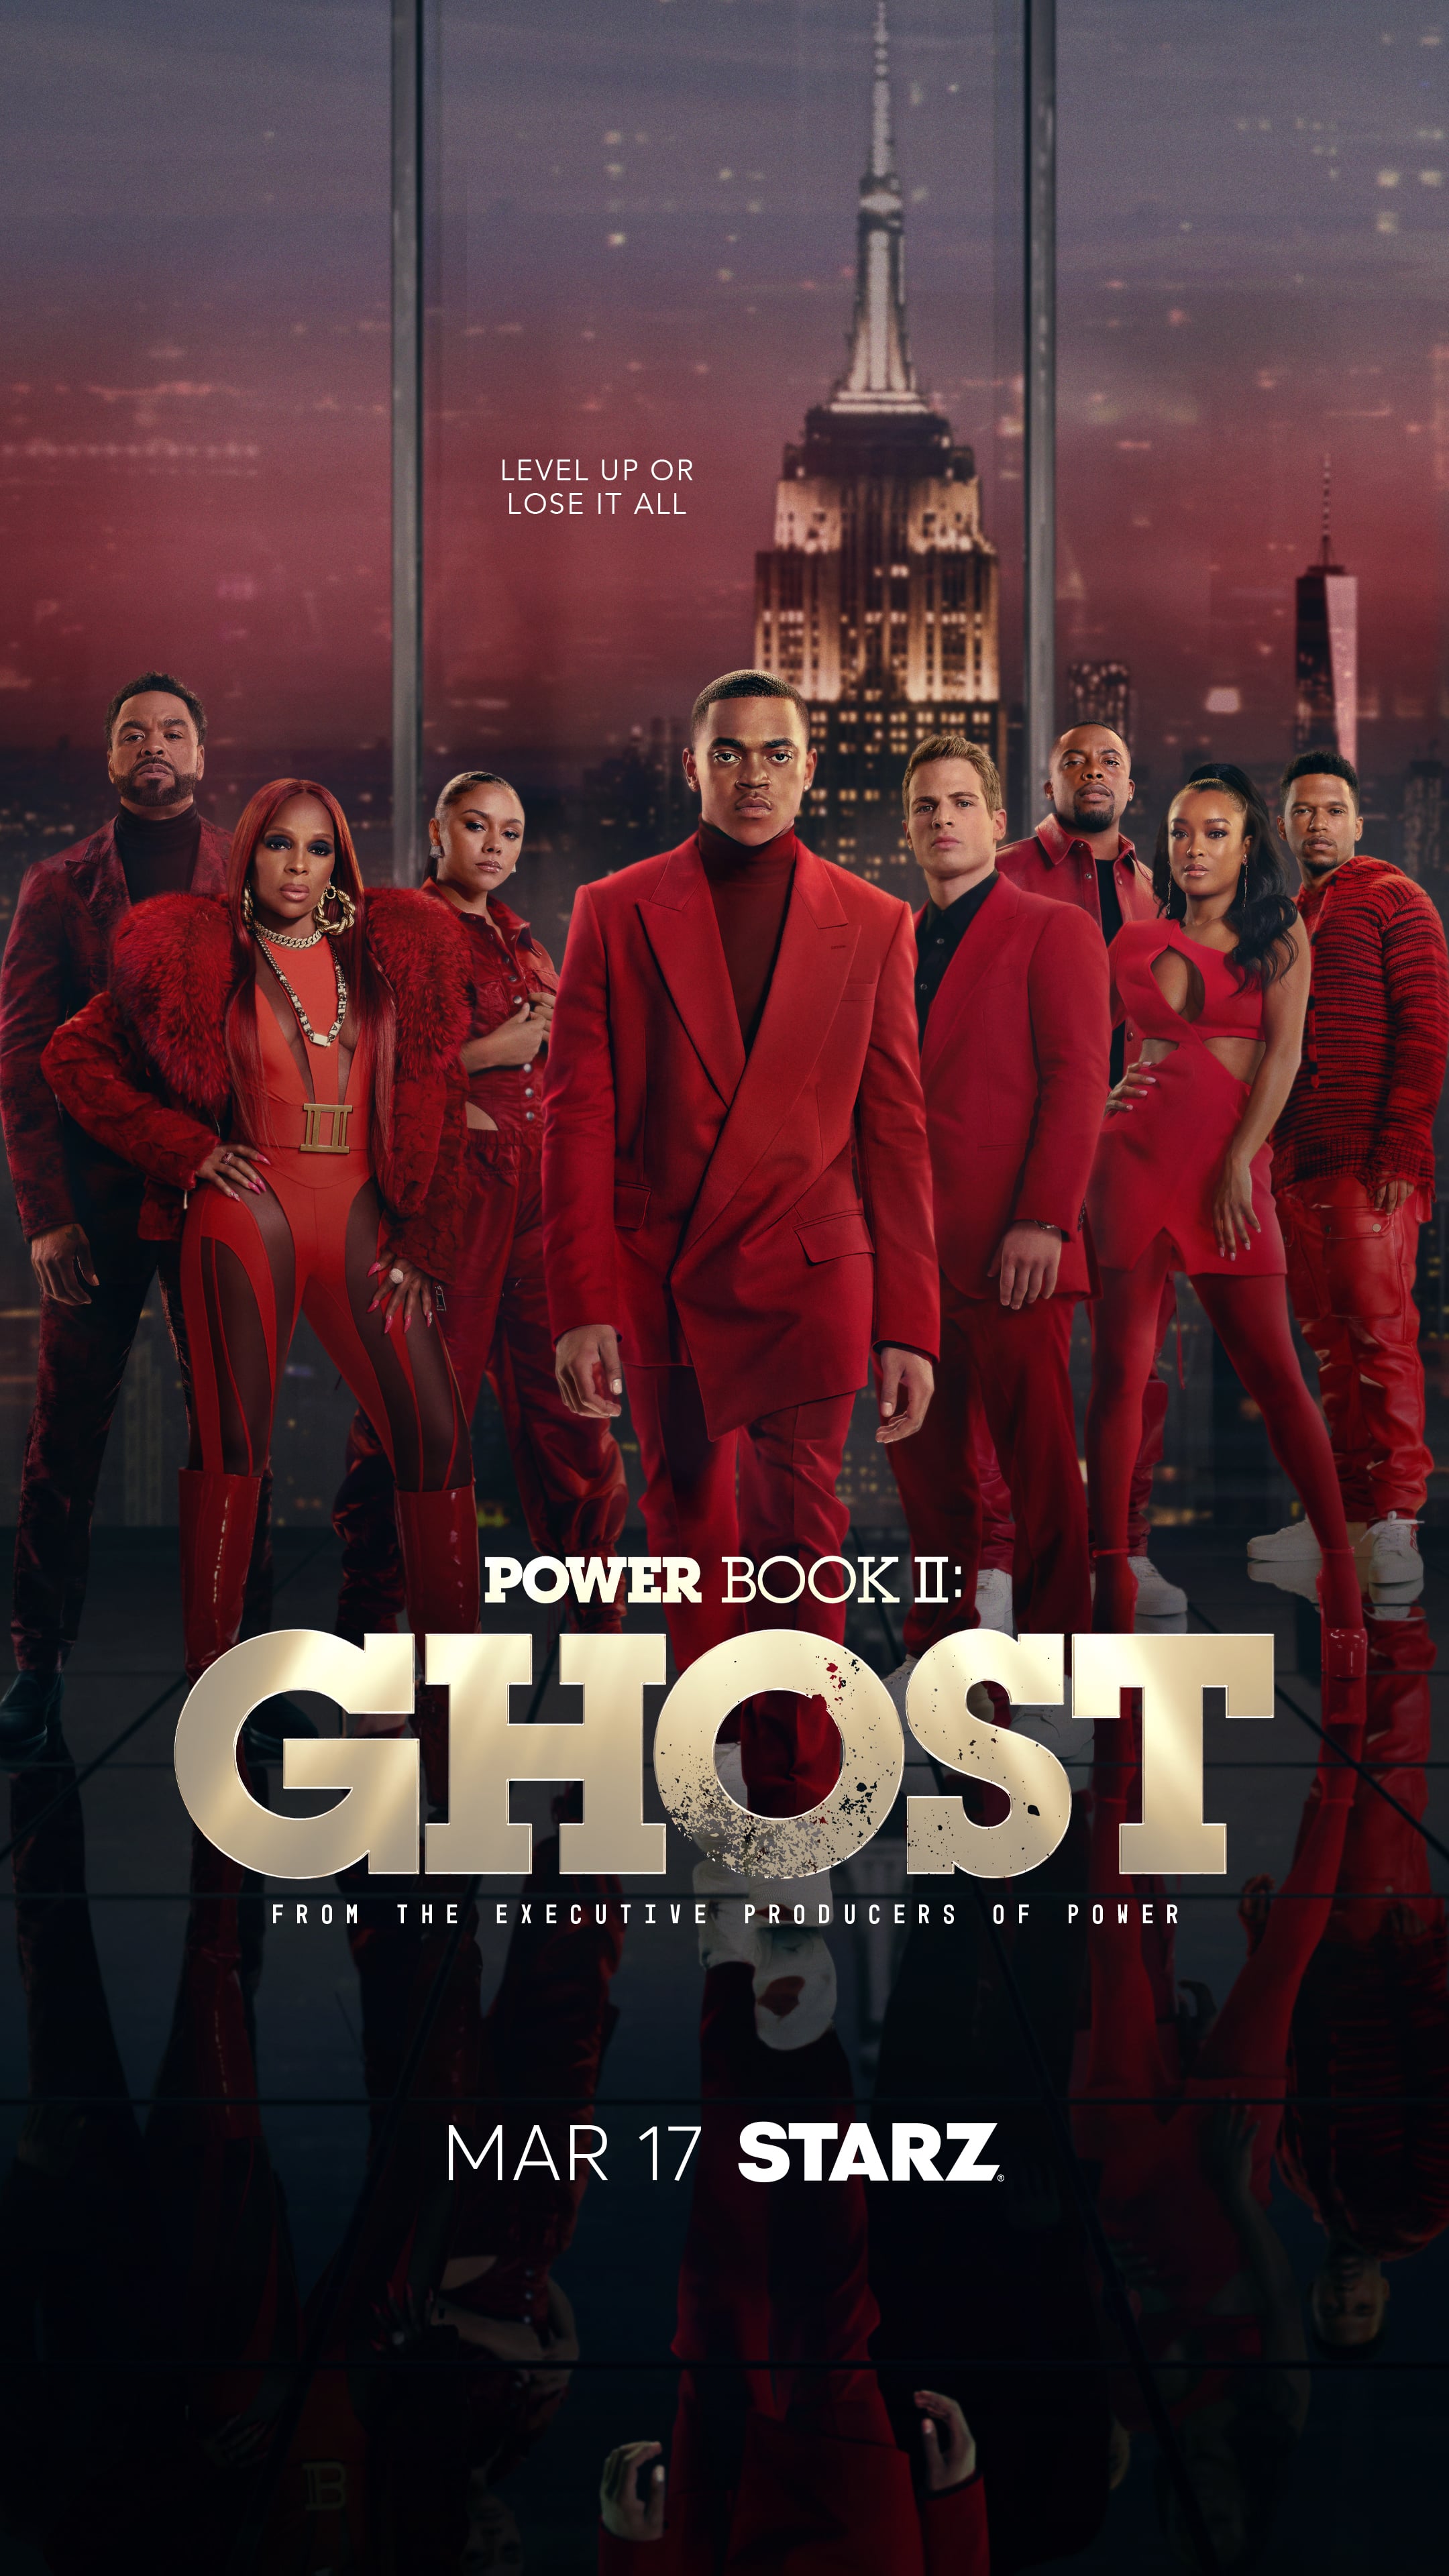 Woody McClain Talks Season 3 Power Book II: Ghost